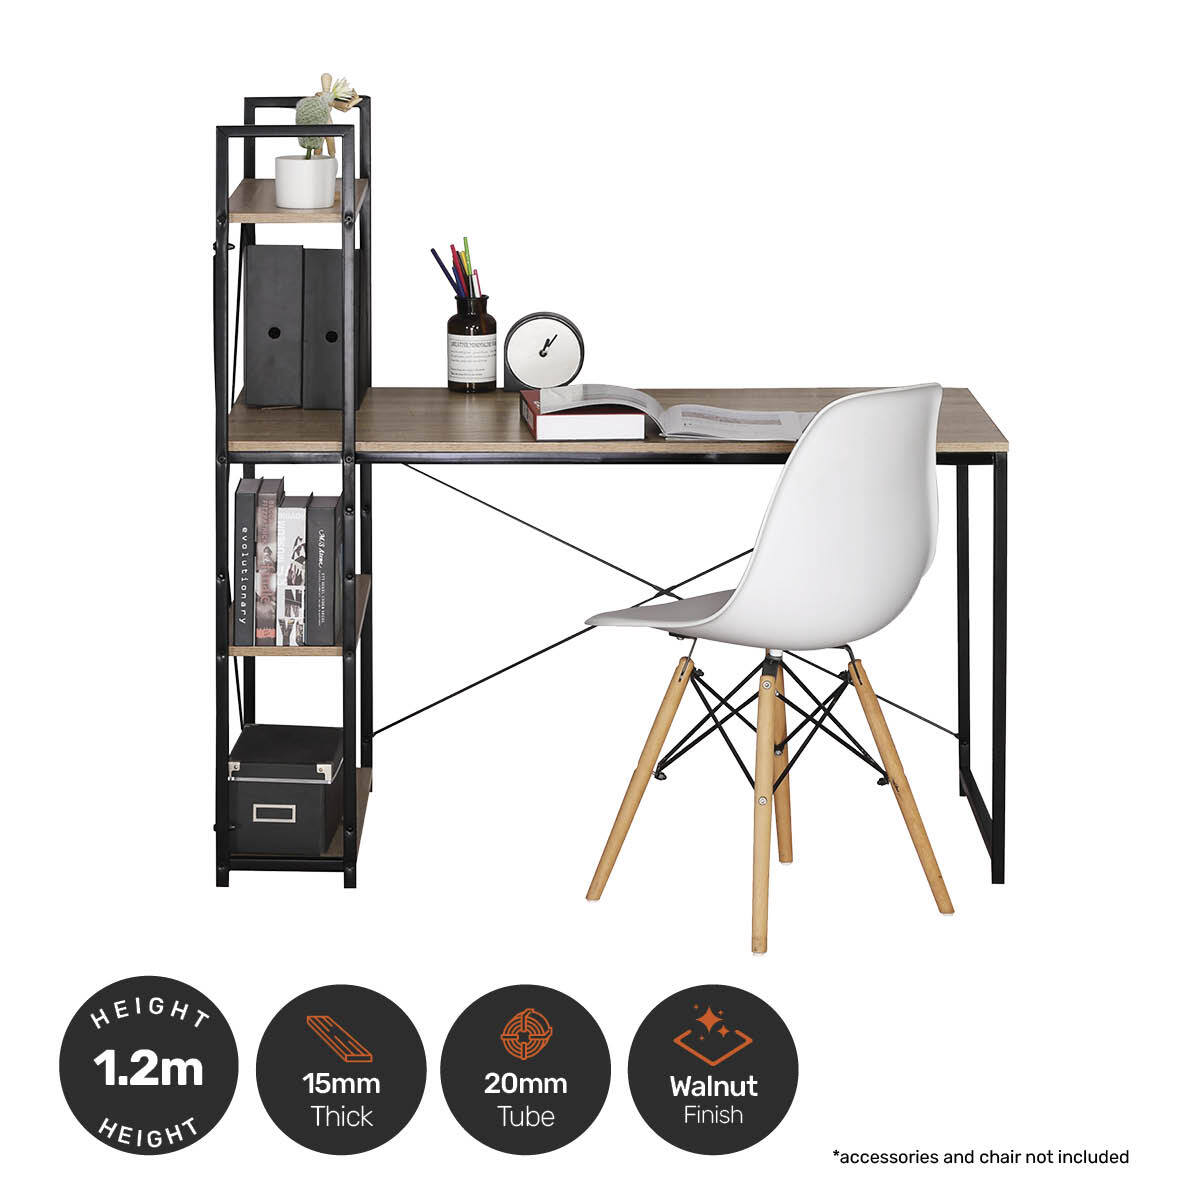 Home Master Office Desk &amp; Storage Shelves Unique Stylish Modern Design 1.2m